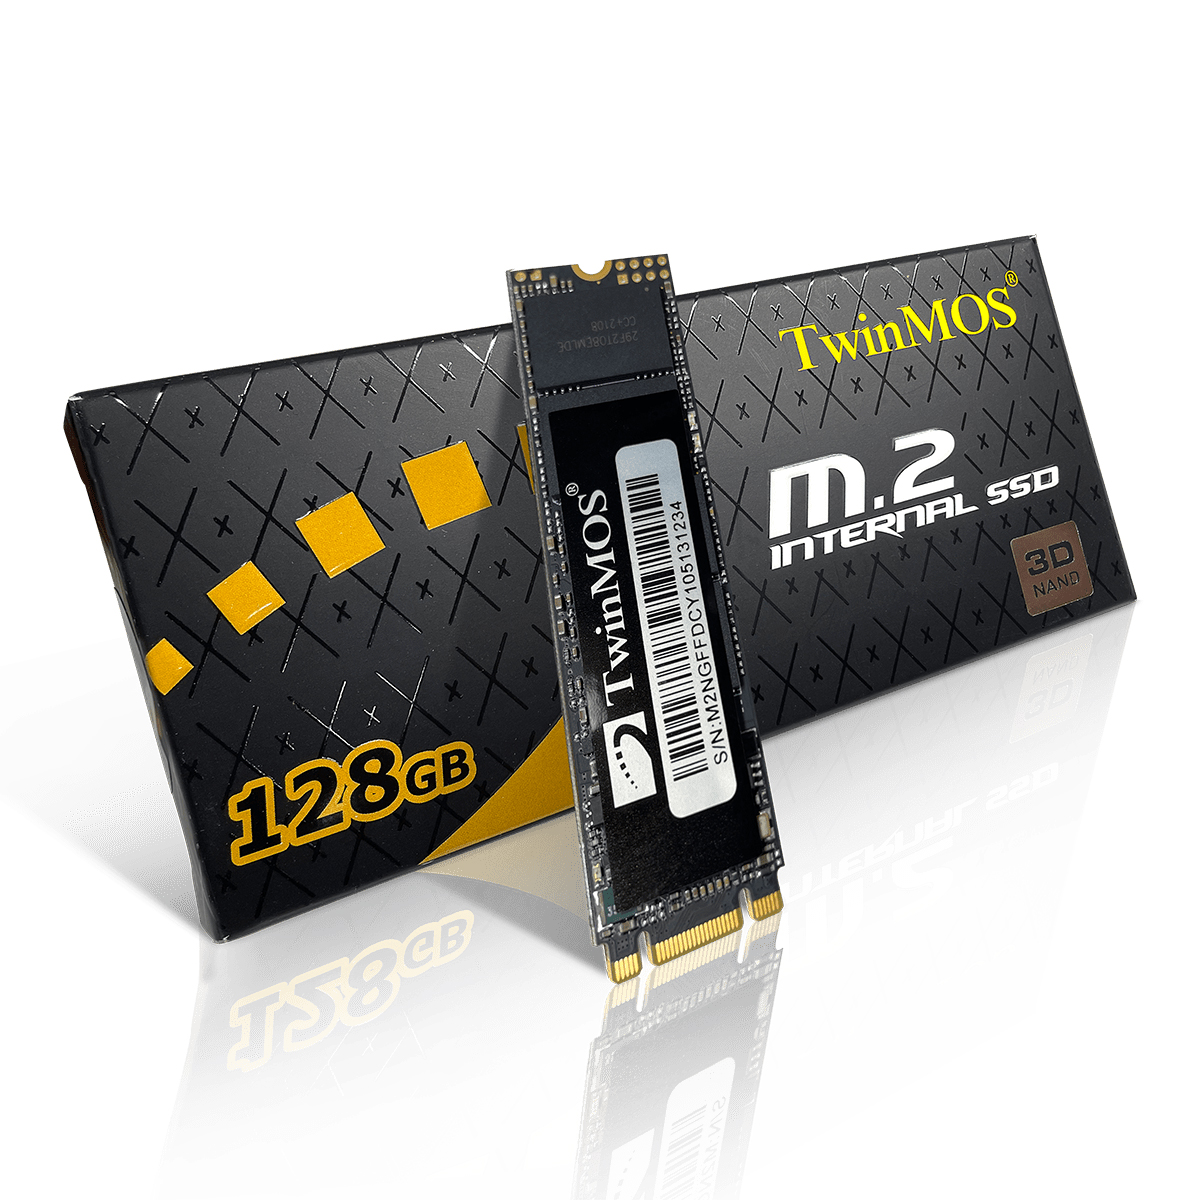 HDD SSD M.2 TWINMOS 128GB 3D NAND, SSD HDD